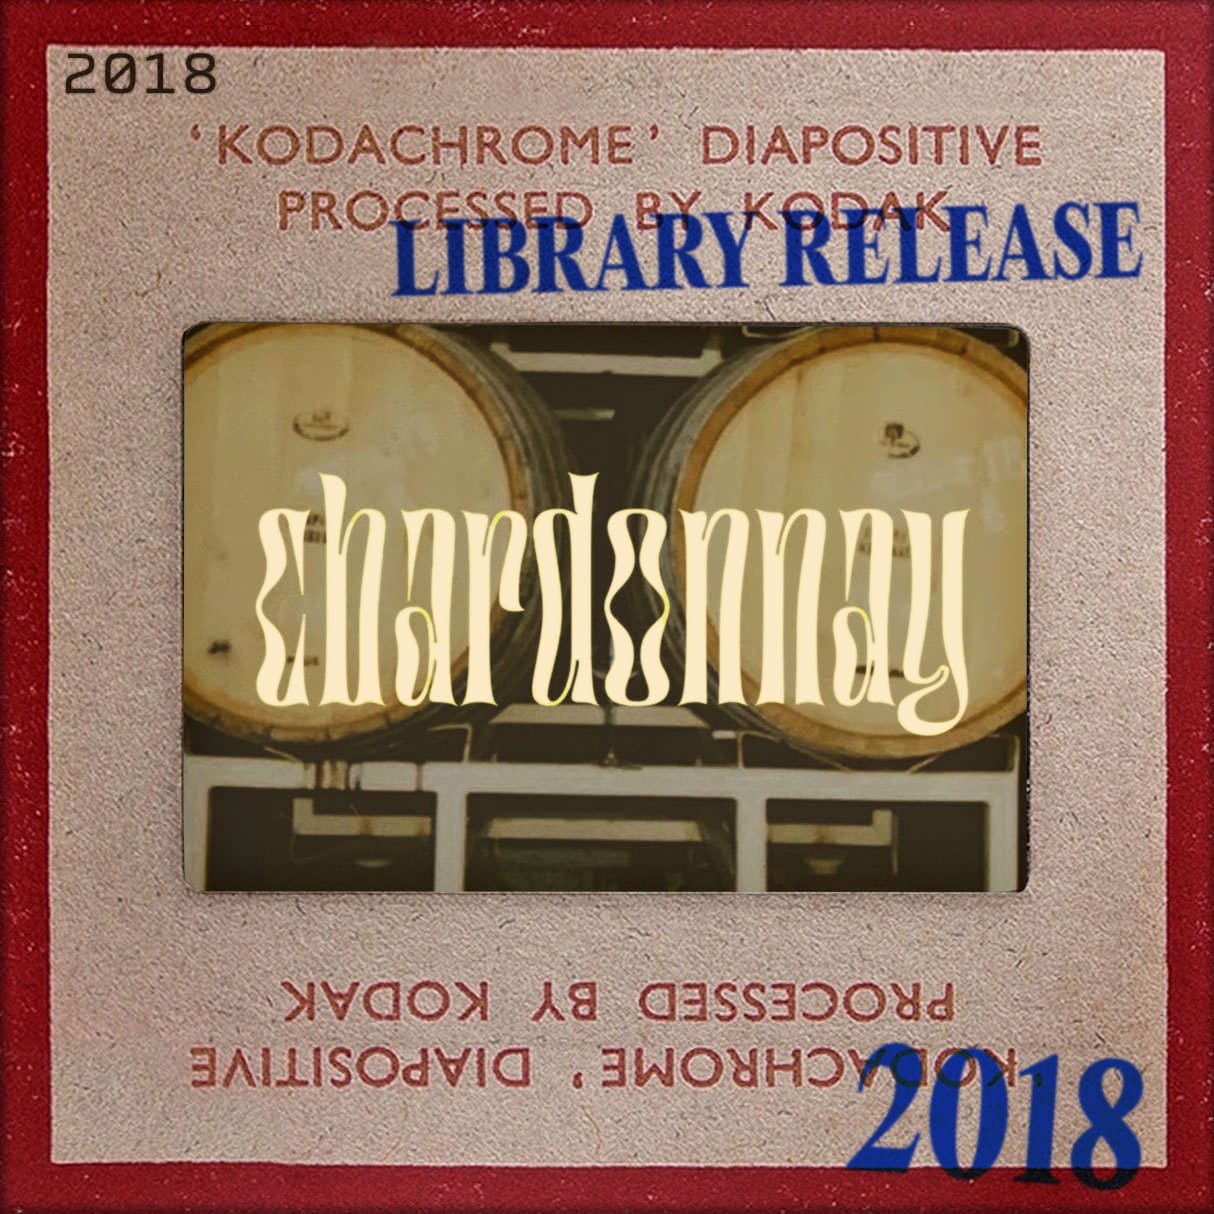 Chardonnay 2018 - Plot Wines